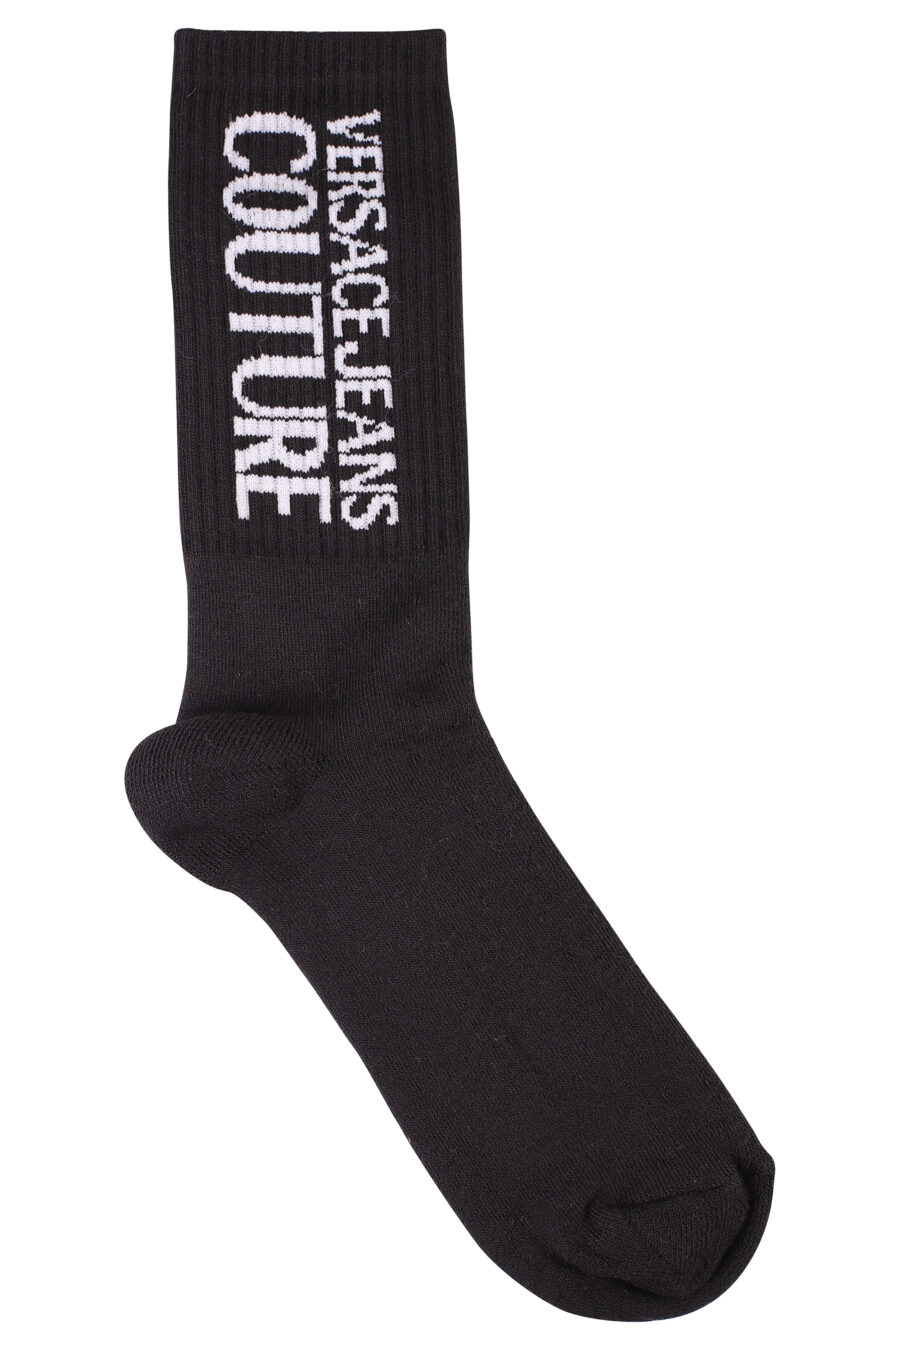 Calcetines negros con logo vertical blanco - IMG 8544